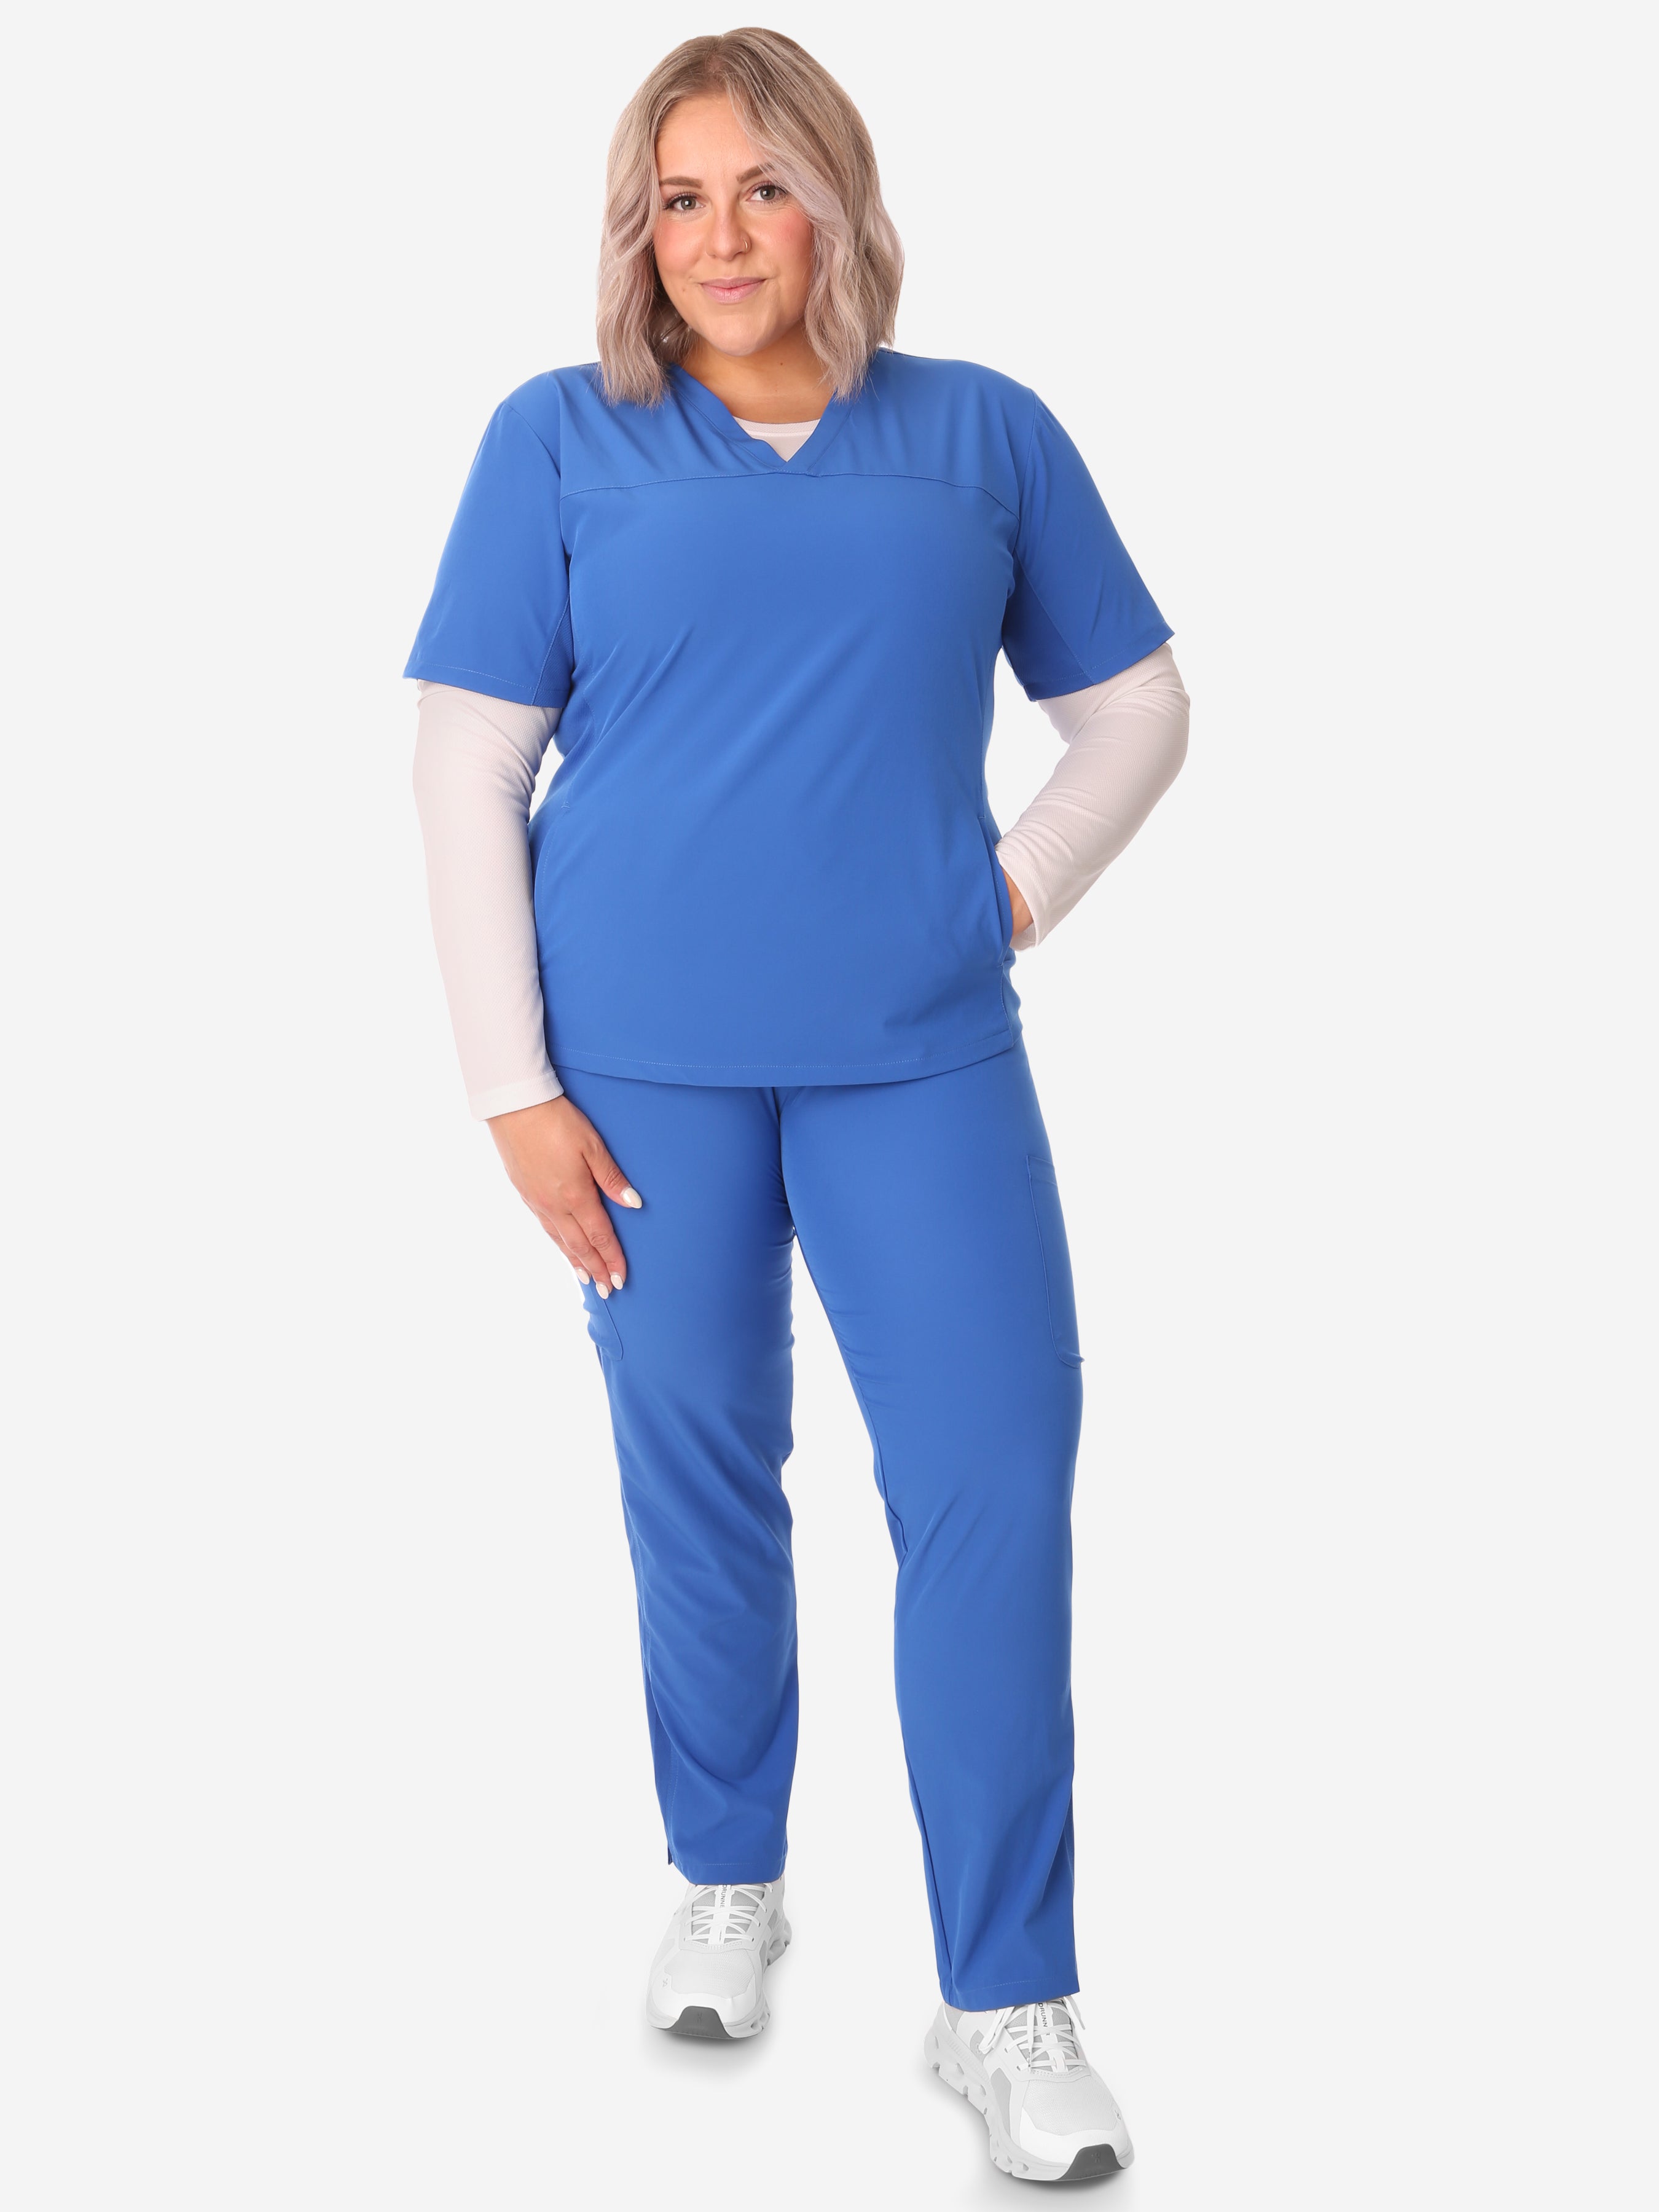 TiScrubs Women's Royal Blue Stash-Pocket Scrub Top + 9-Pocket Pants Full Body Front